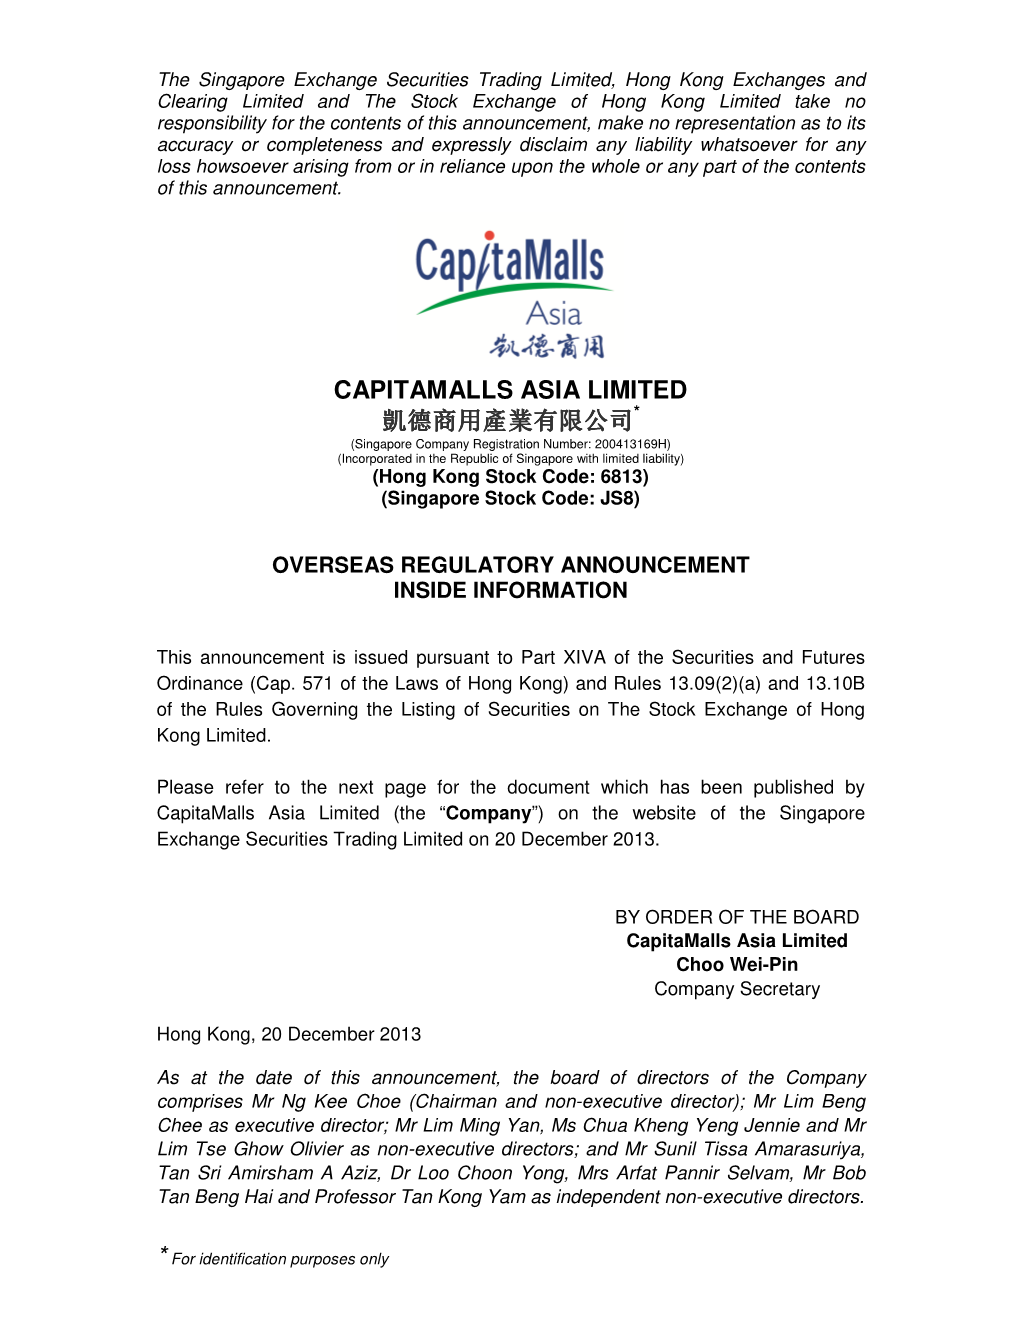 Capitamalls Asia Limited 凱德商用產業有限公司